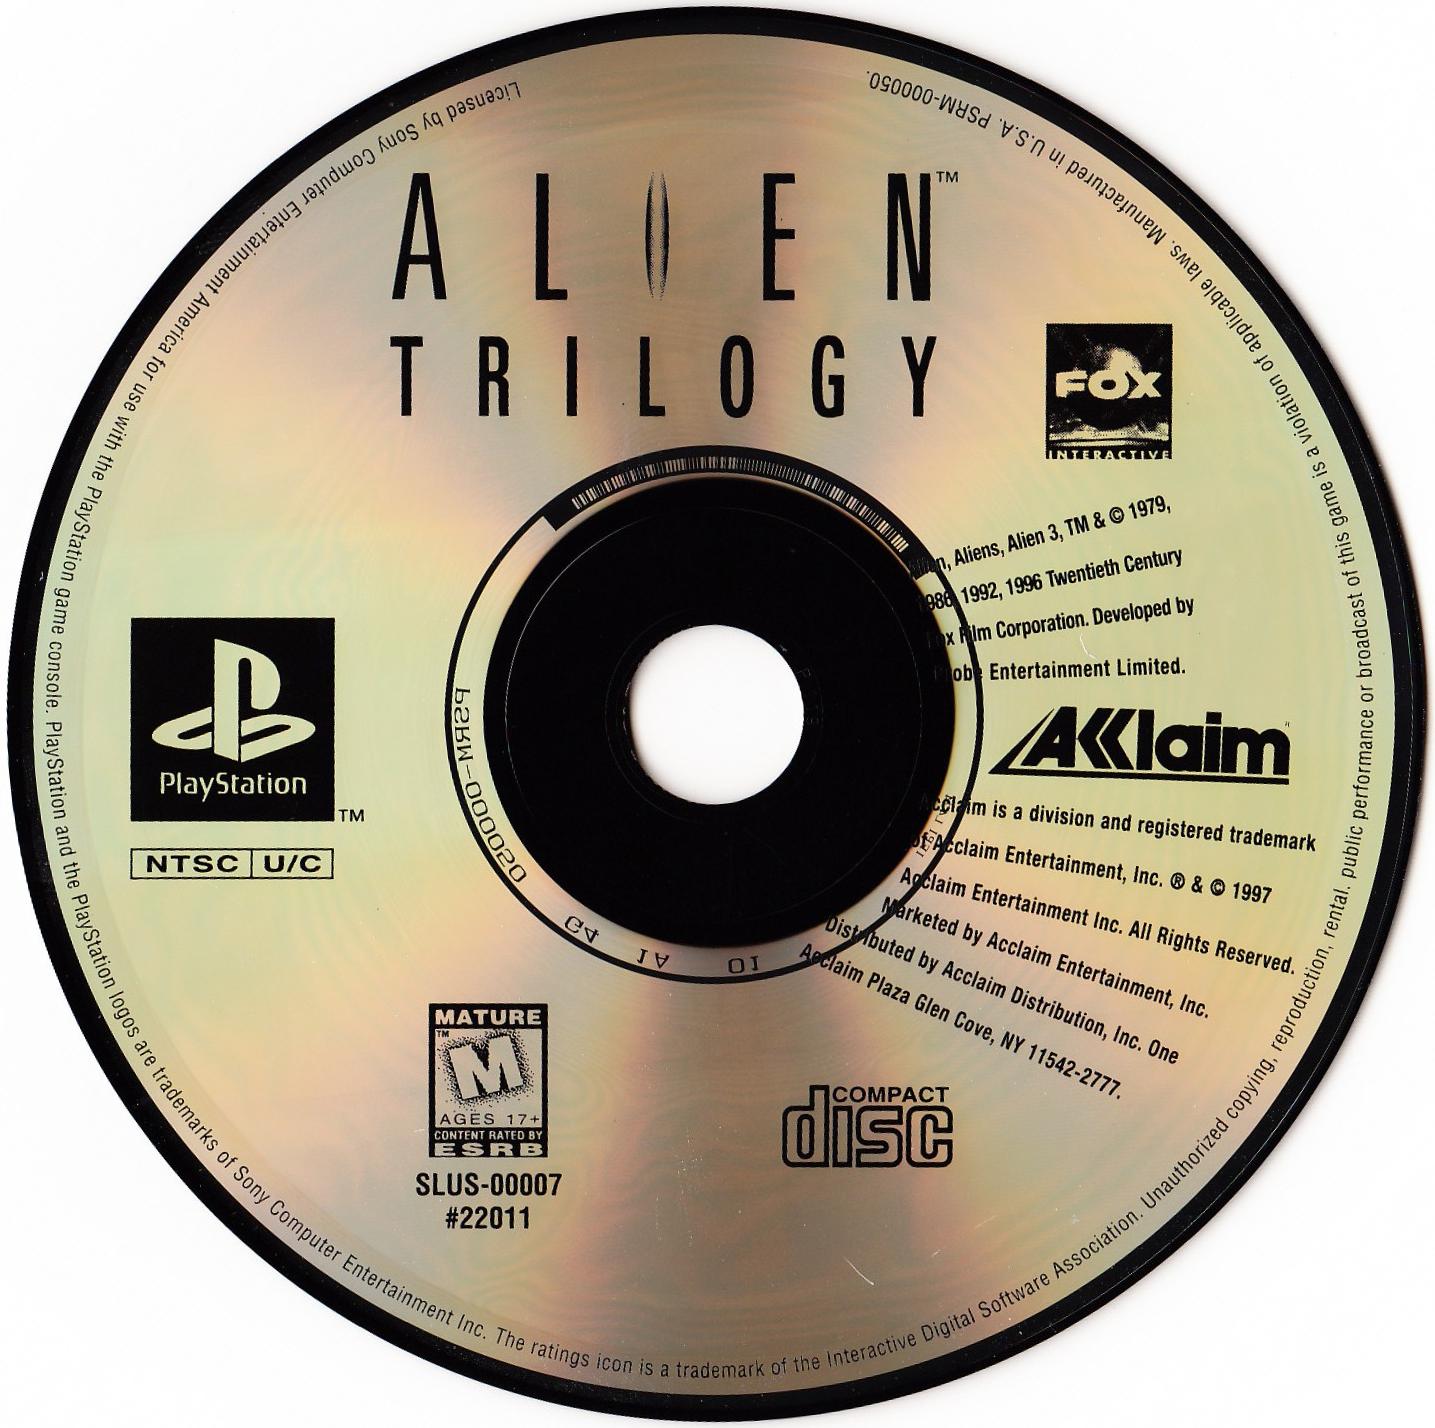 download the alien trilogy